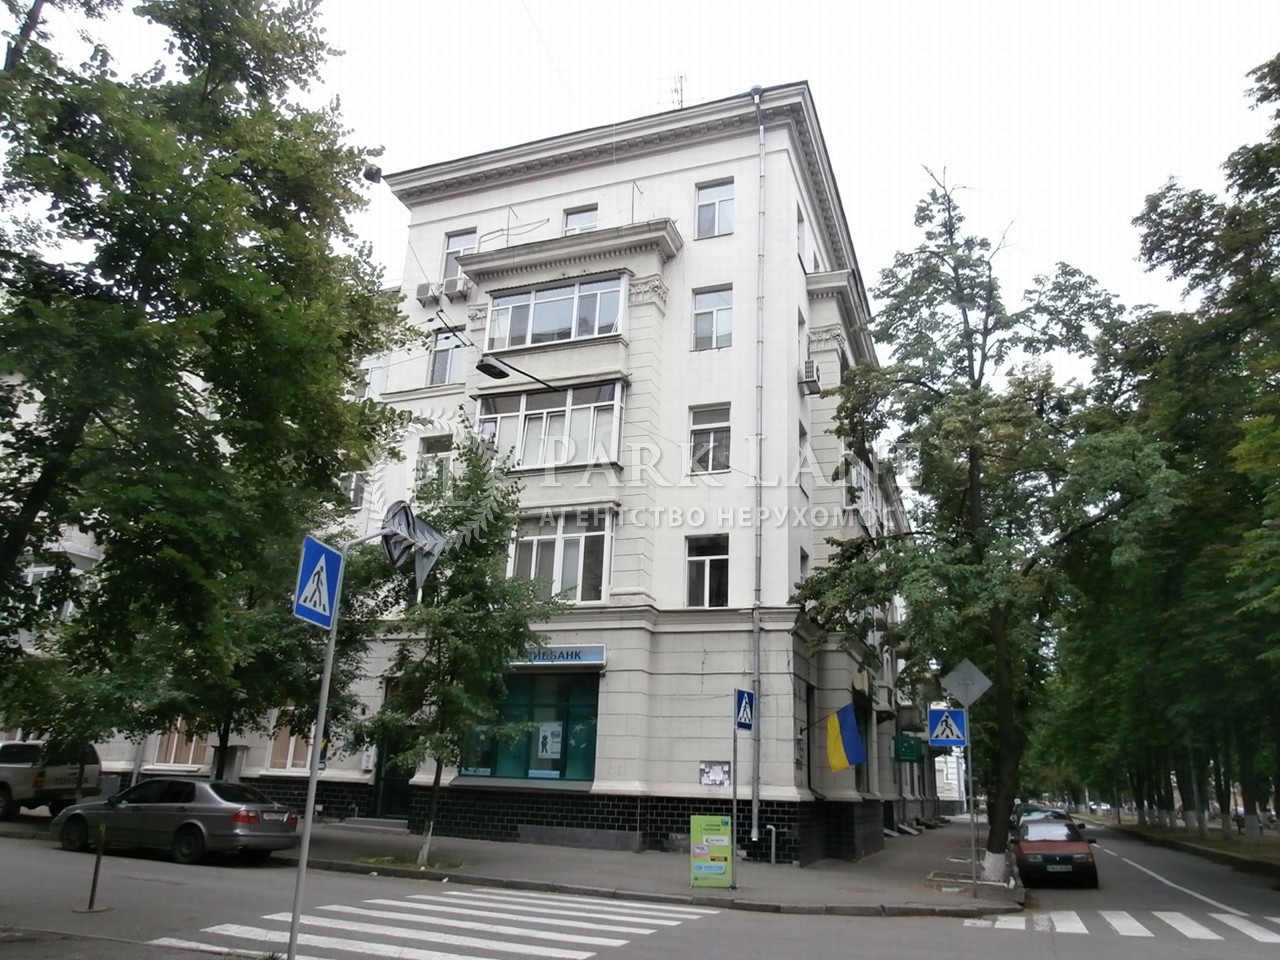  Офис, ул. Липская, Киев, B-104821 - Фото 1